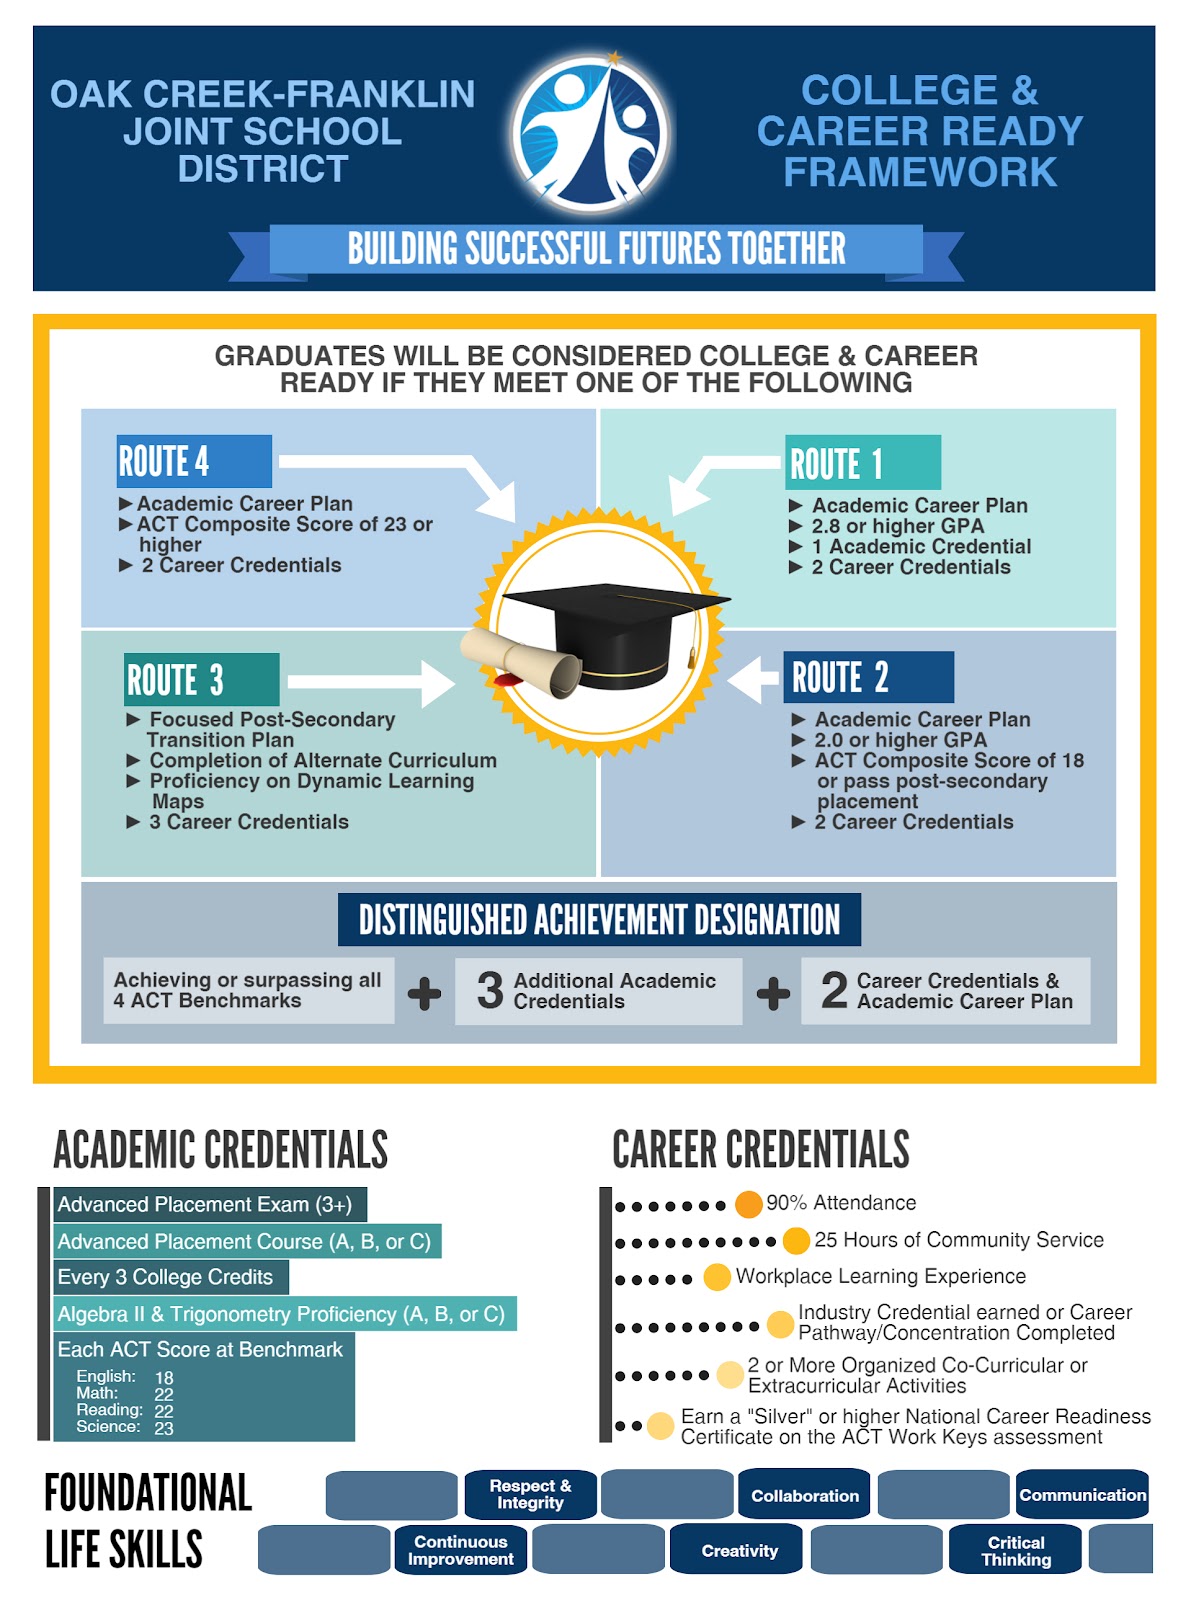 College & Career Ready FrameworkFINAL.jpg